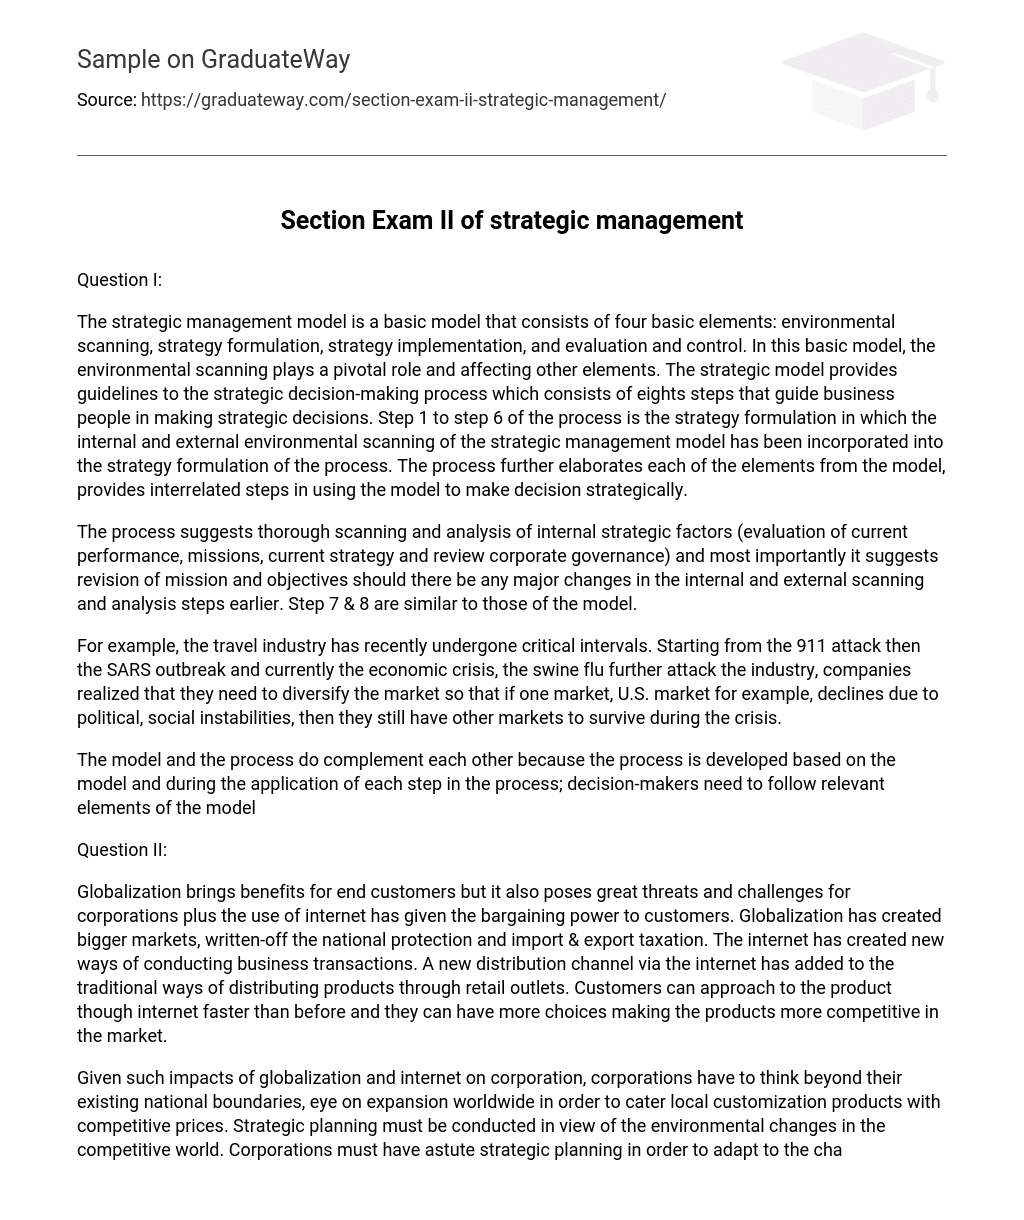 Section Exam II of strategic management